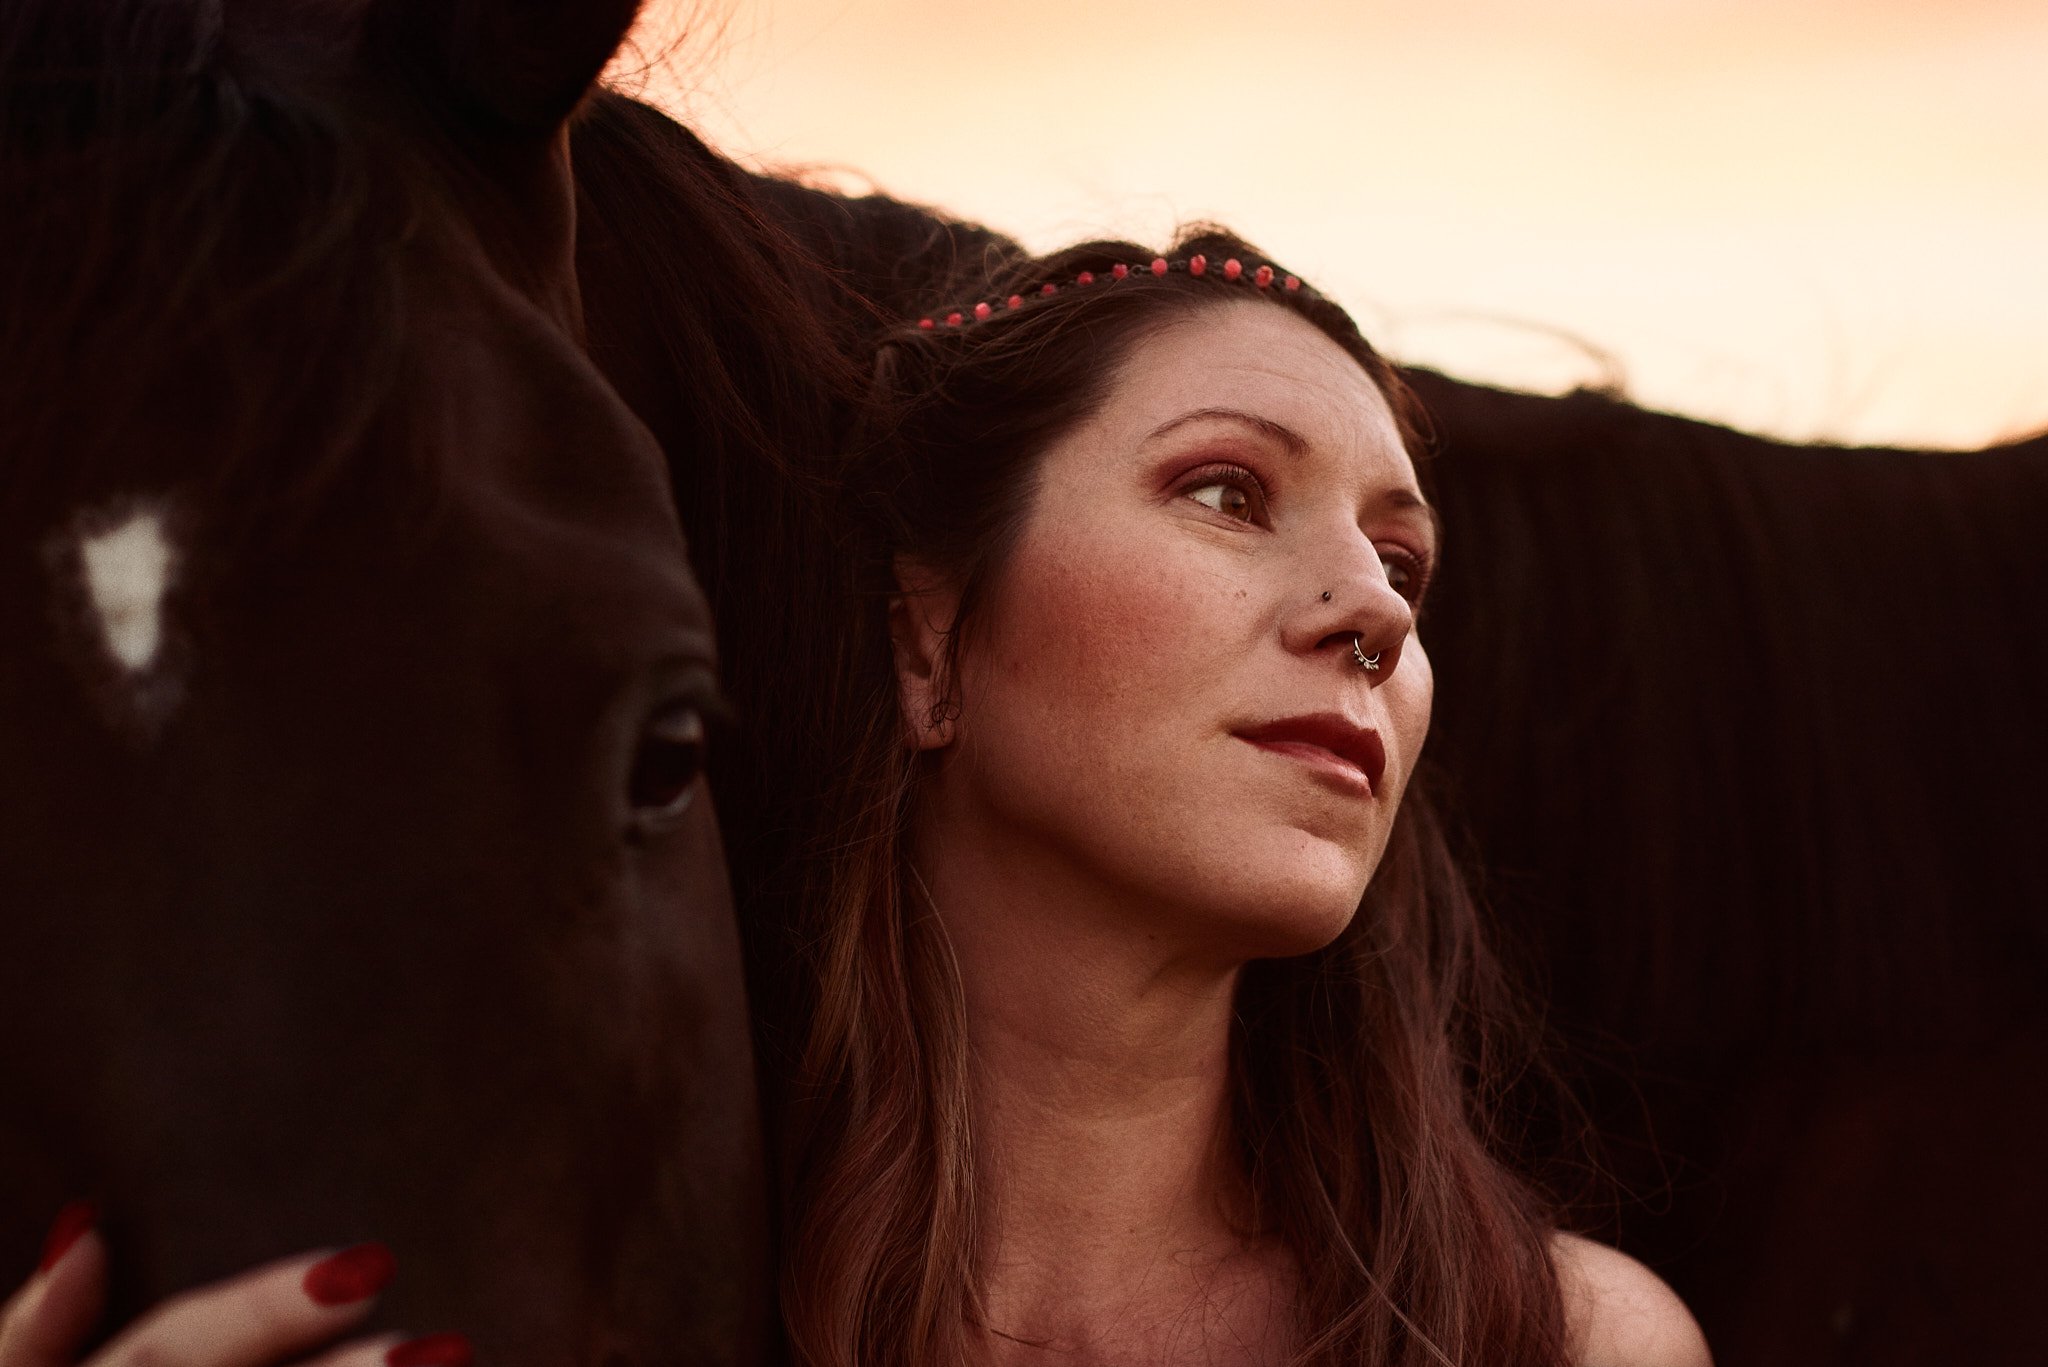 013_close-up-portrait-woman-equestrian-Oconomowoc-Erin-Beckett.jpg